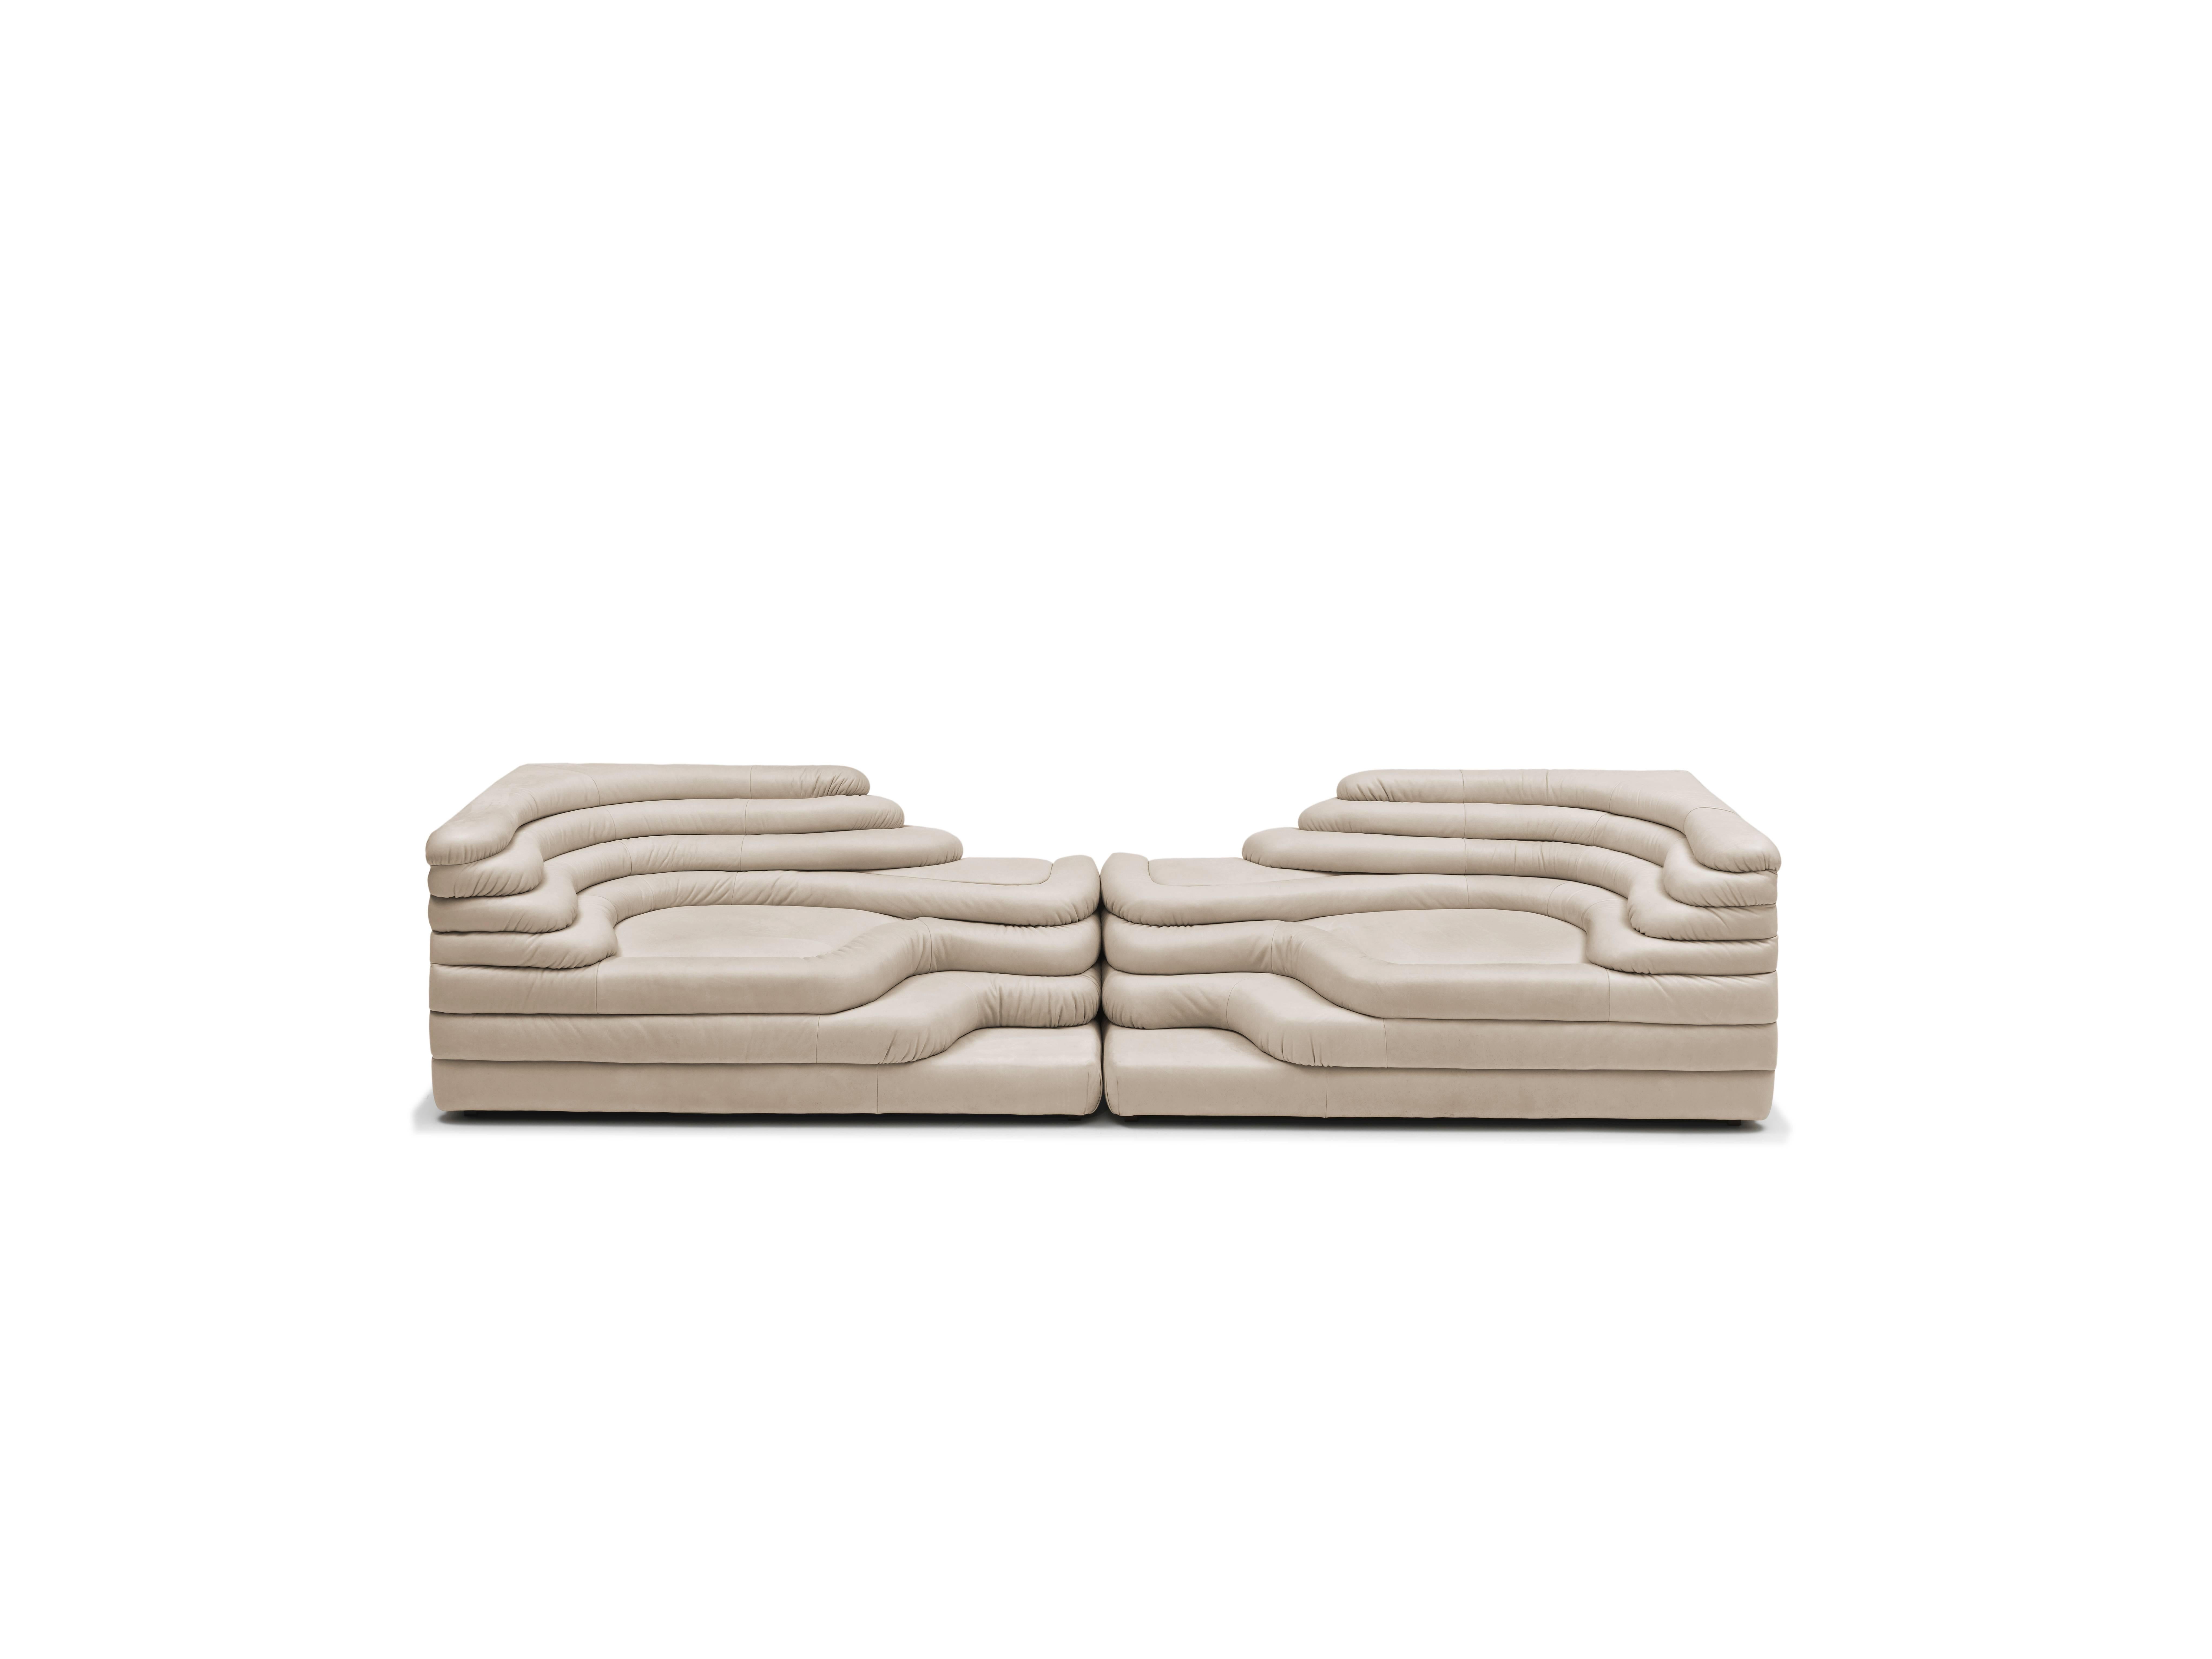 Swiss De Sede DS-1025/09 Terrazza Sofa in Perla Upholstery by Ubald Klug For Sale